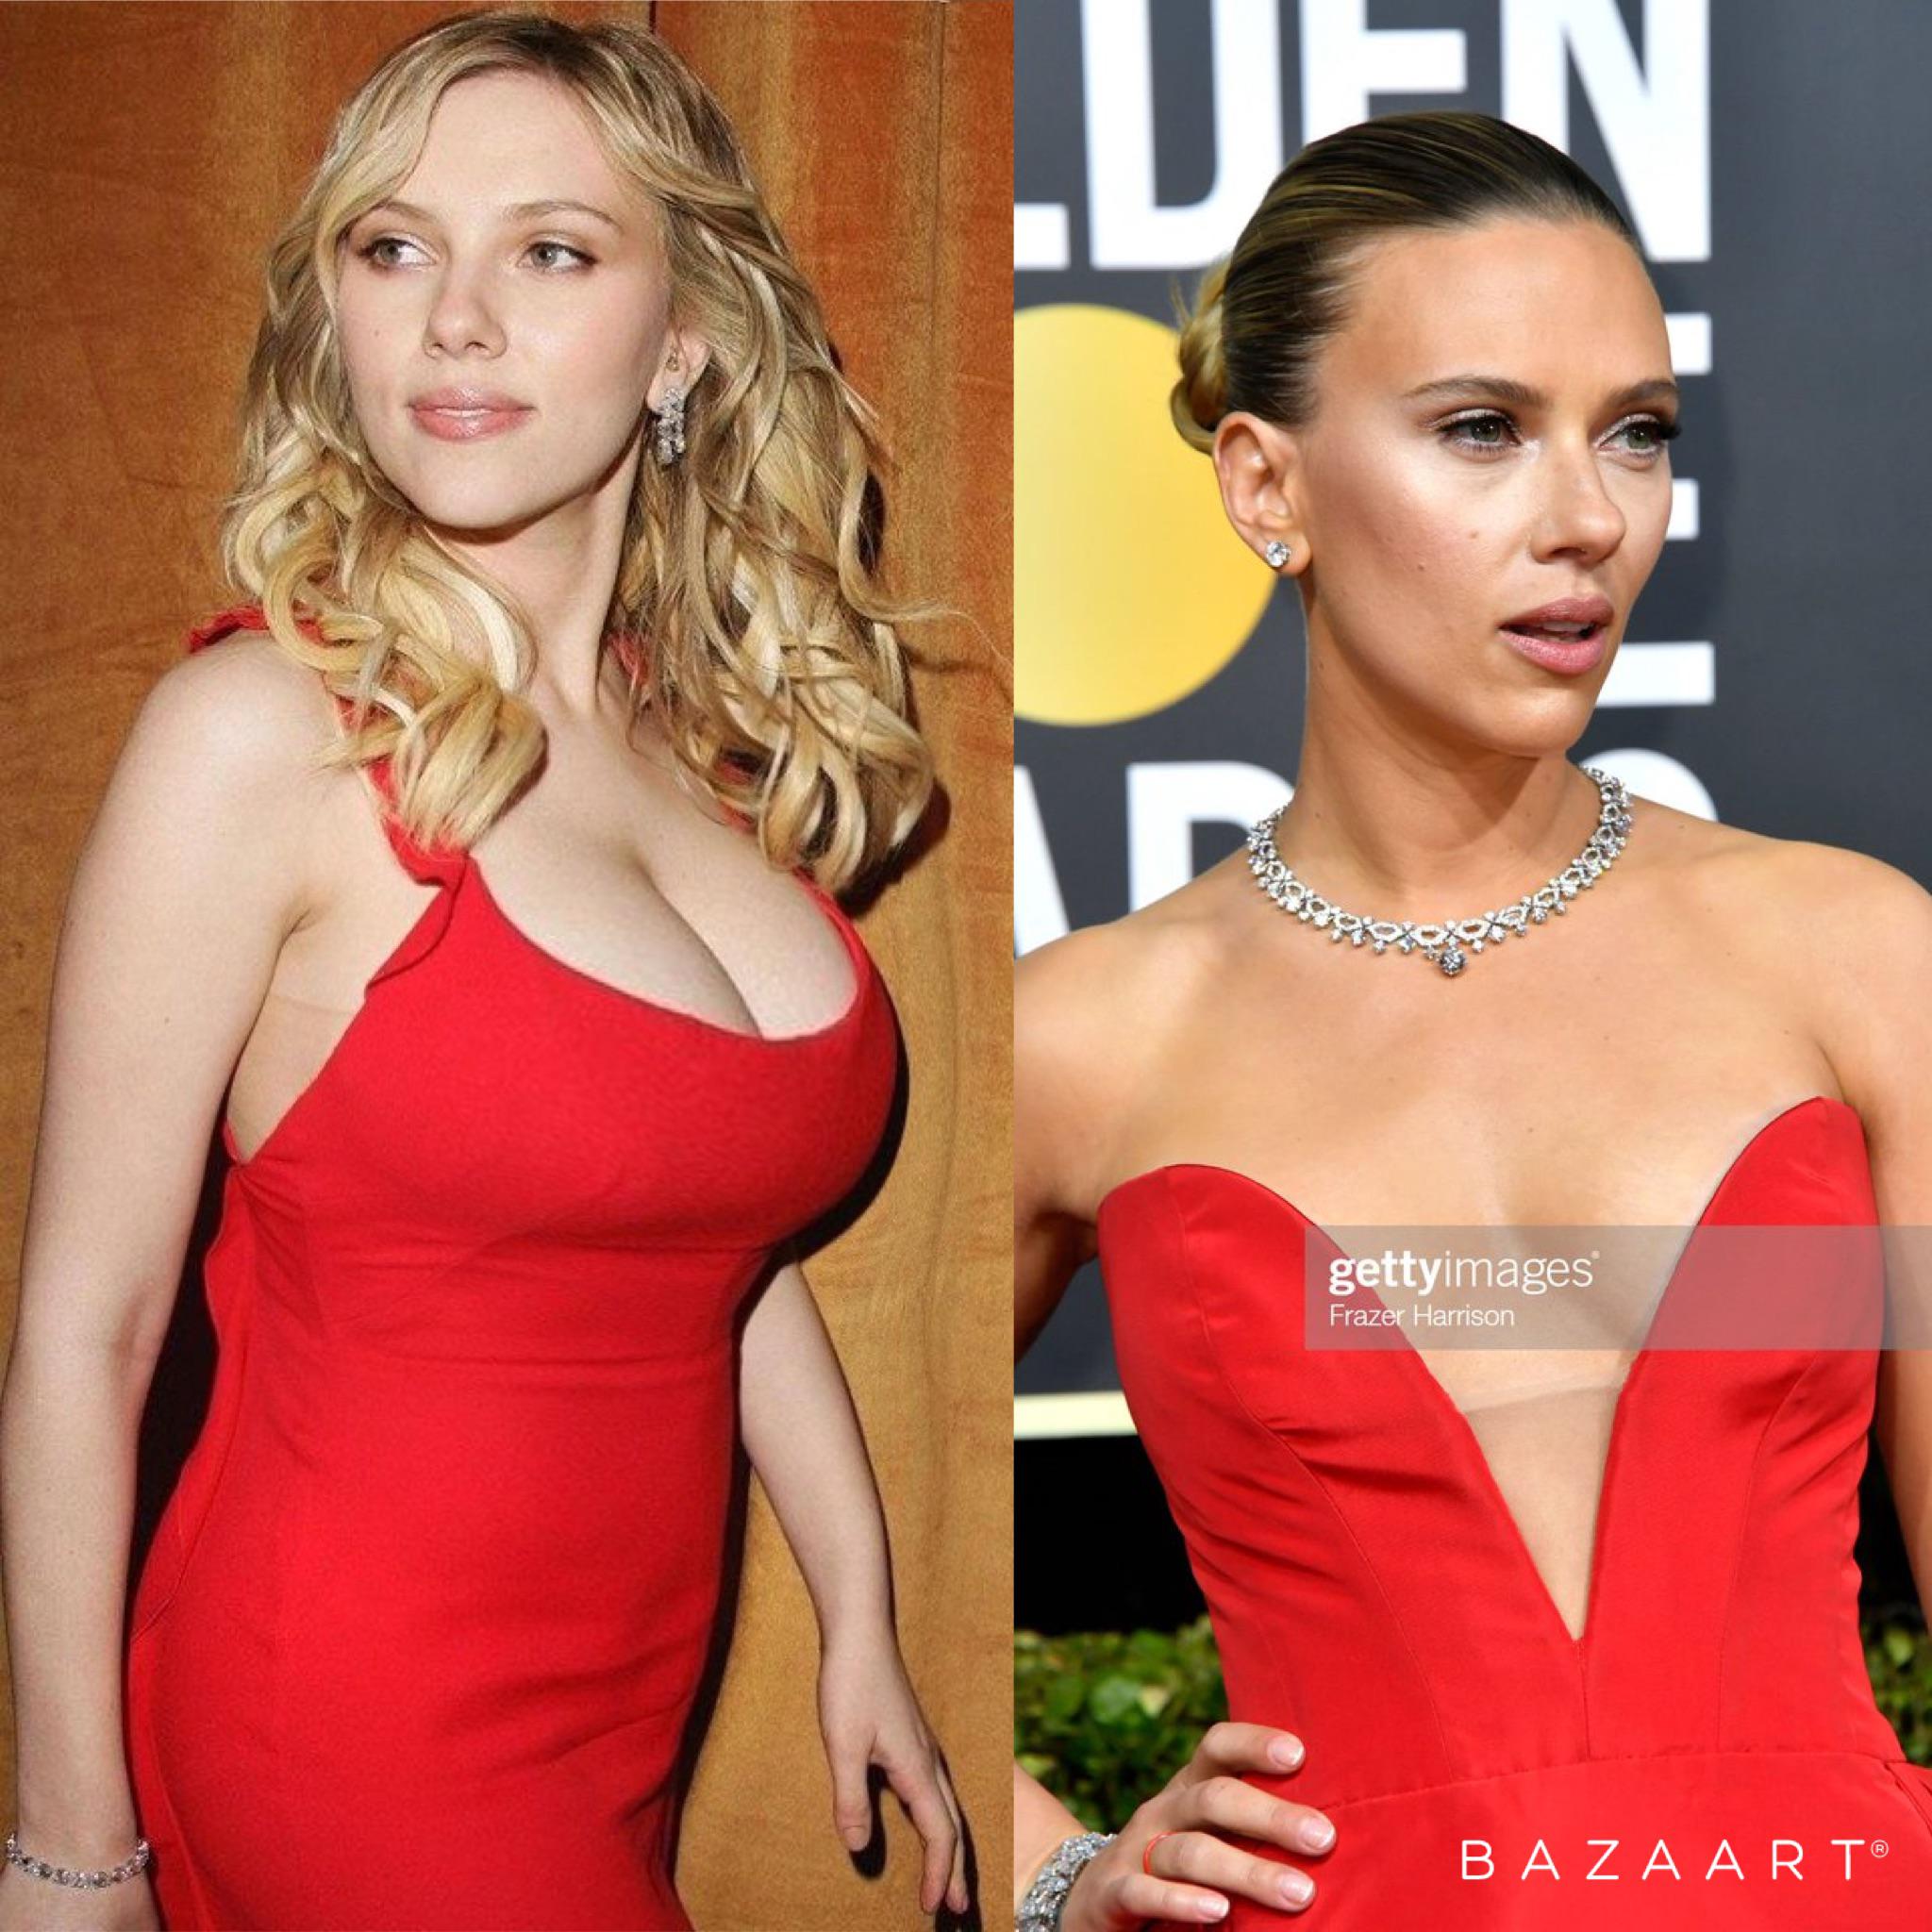 Scarlett Johansson - Do you guys prefer bigger or skinny? 1